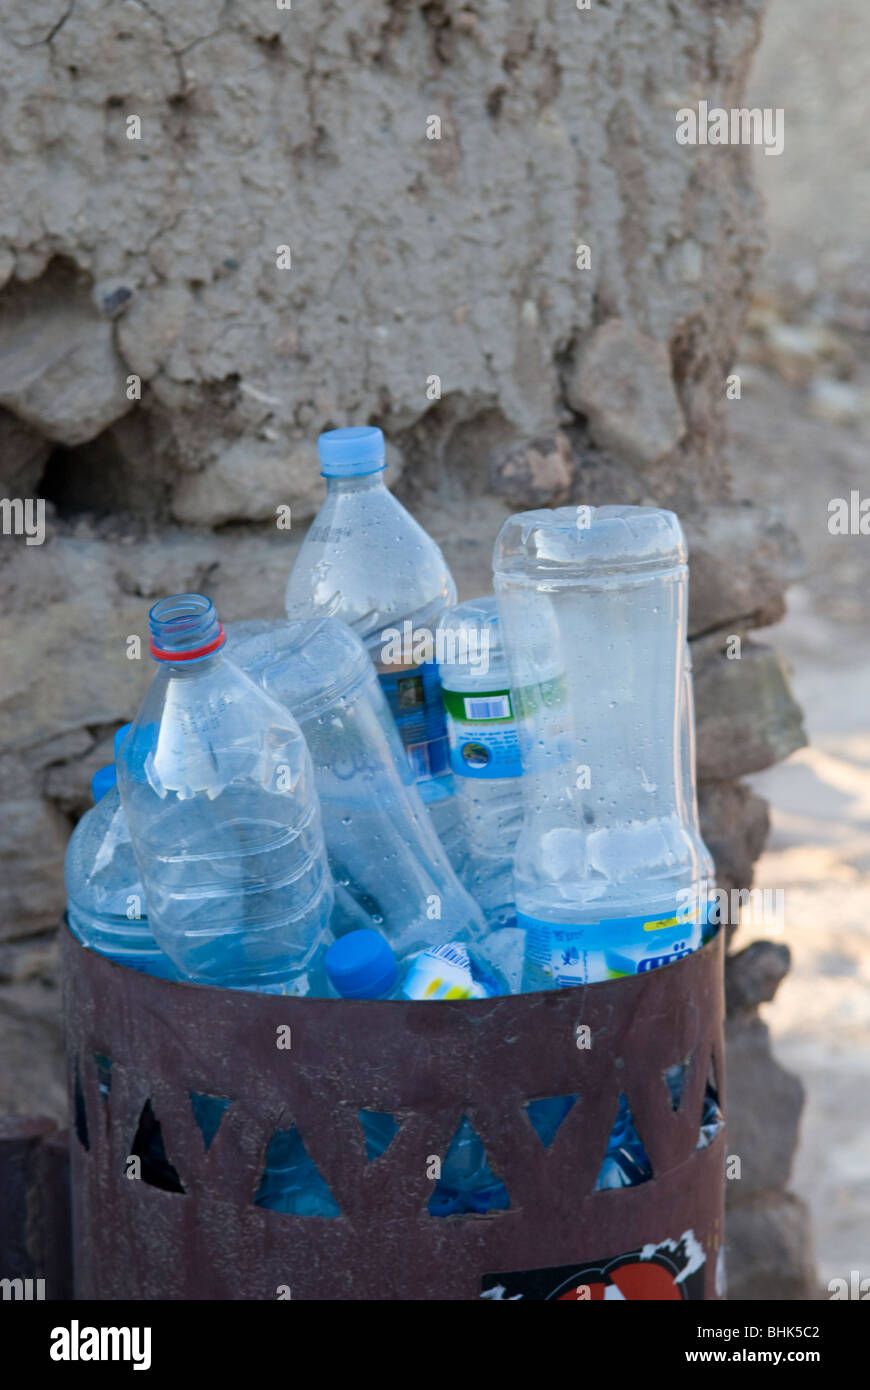 https://c8.alamy.com/compes/bhk5c2/la-contaminacion-causada-por-el-agua-en-botellas-de-plastico-ait-benhaddou-ouarzazate-marruecos-bhk5c2.jpg